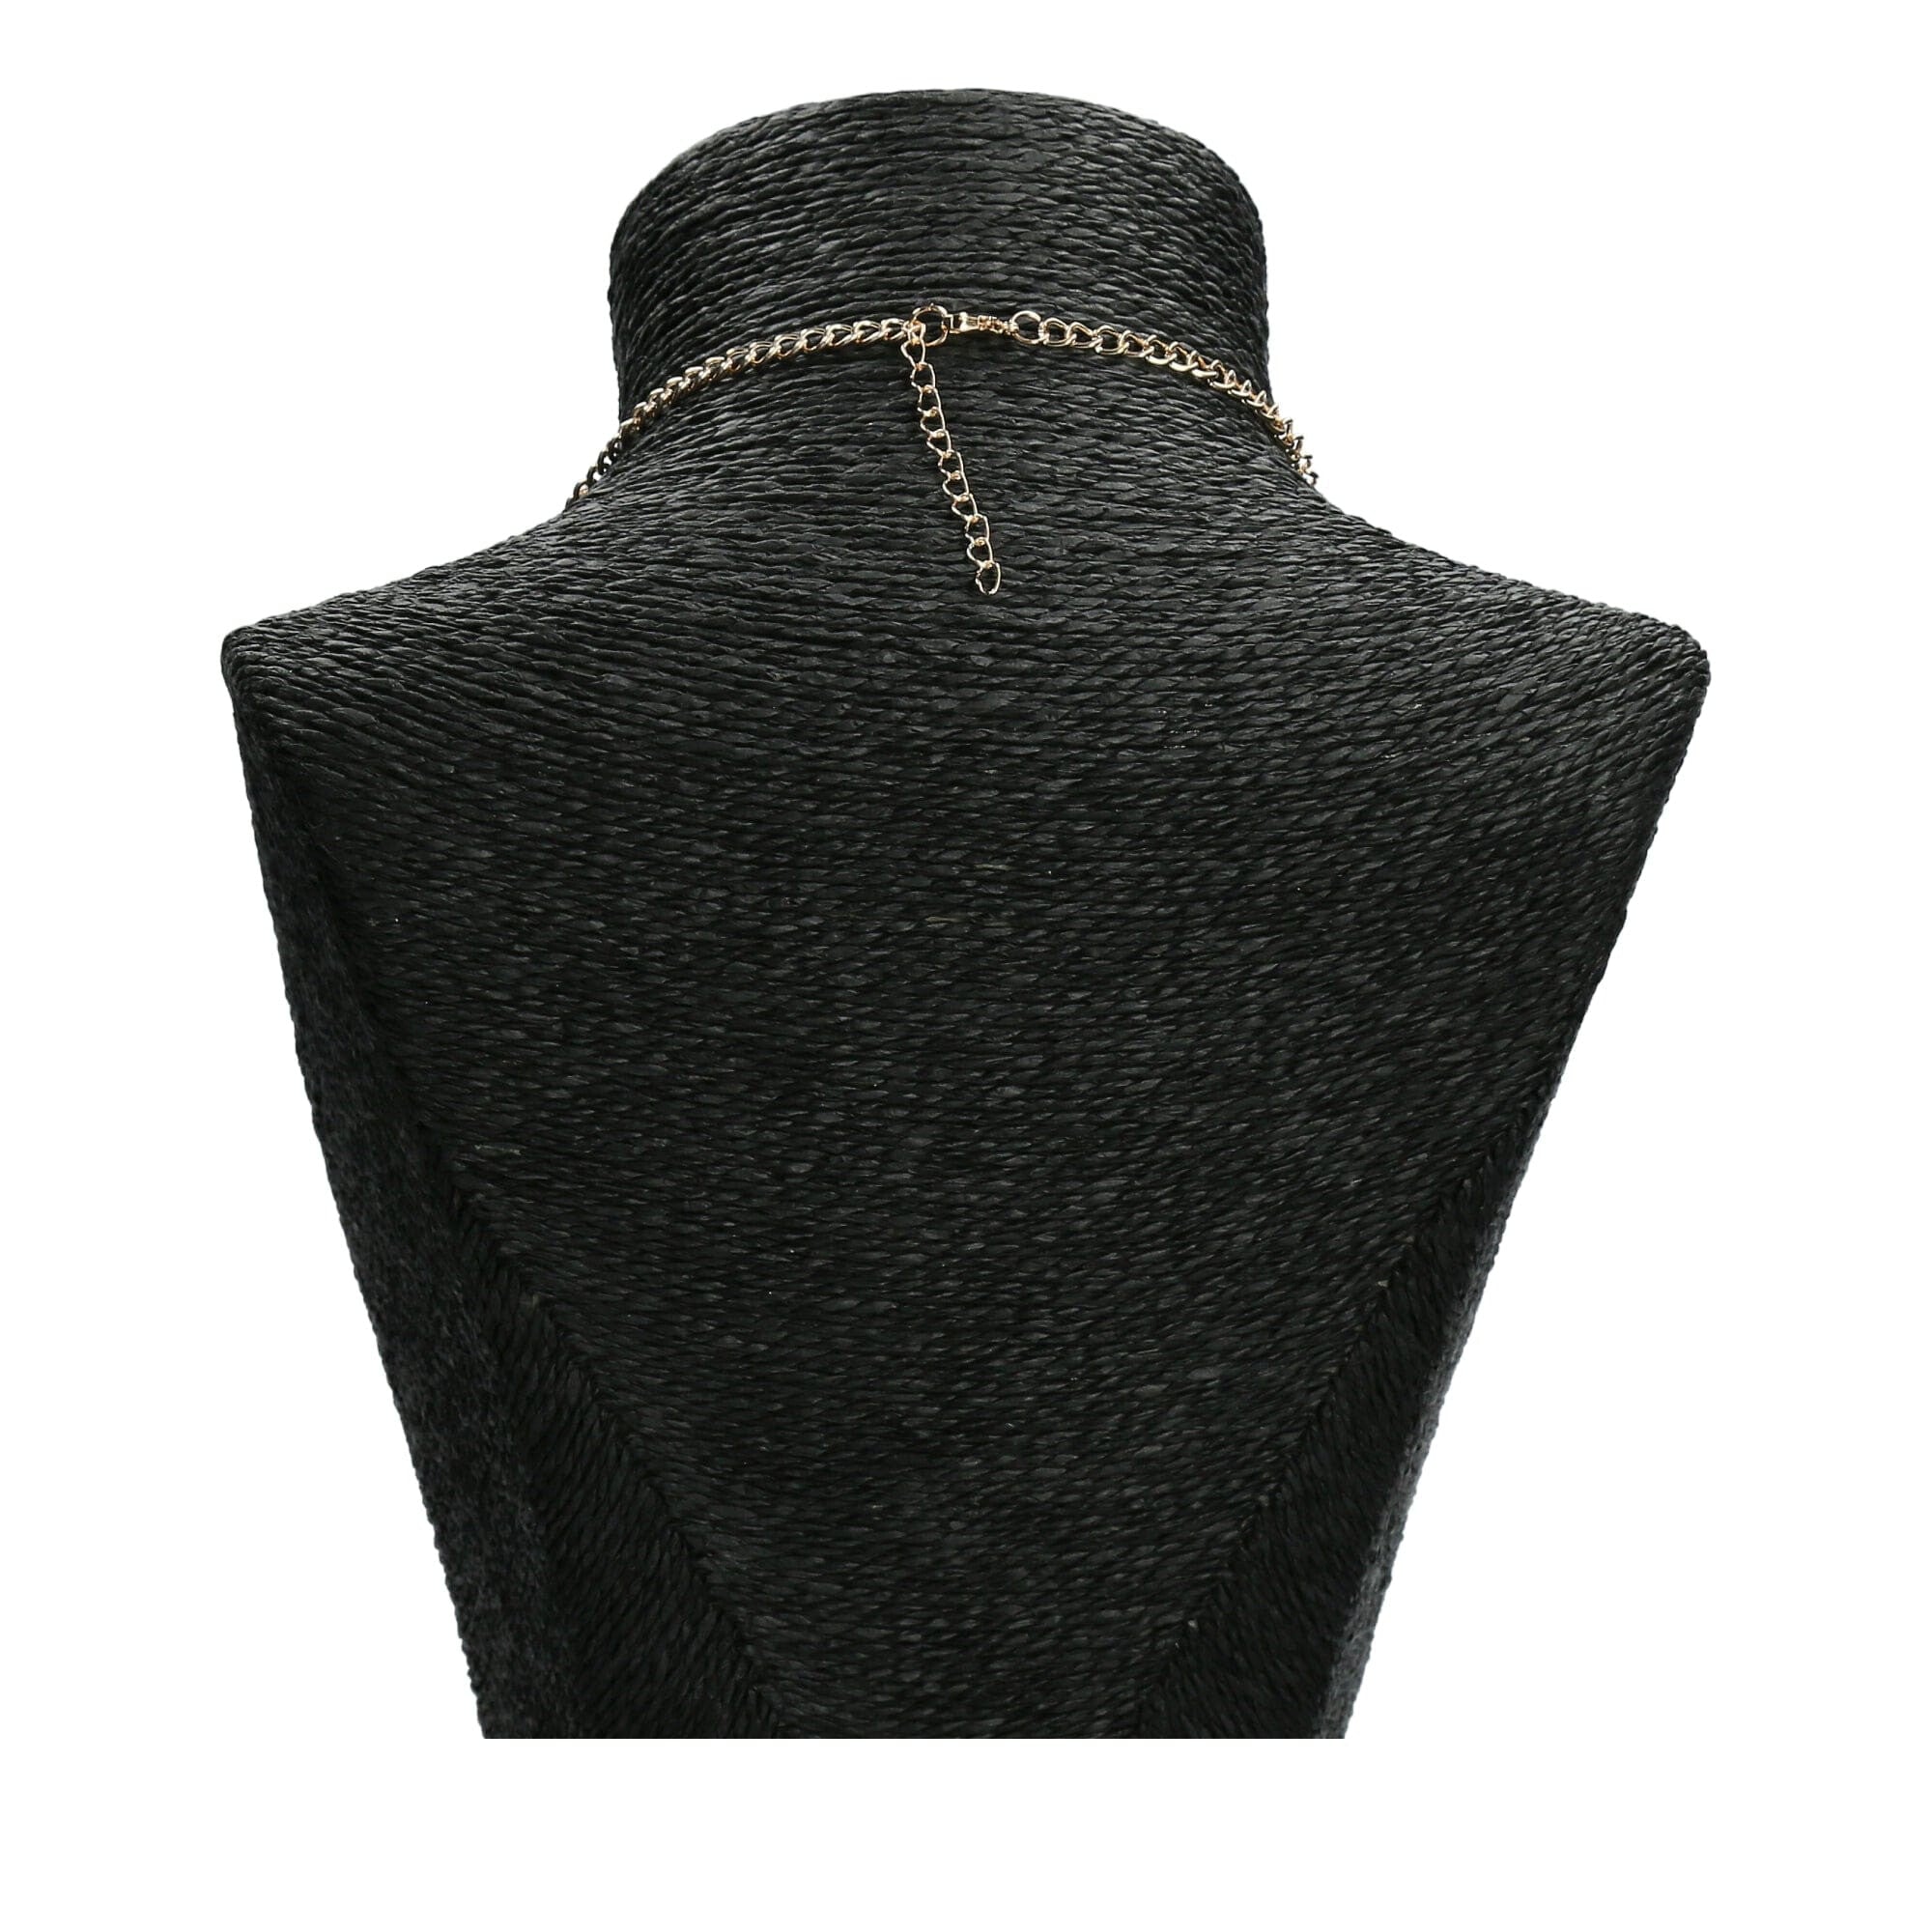 Jewelry necklace Mindy - Necklace